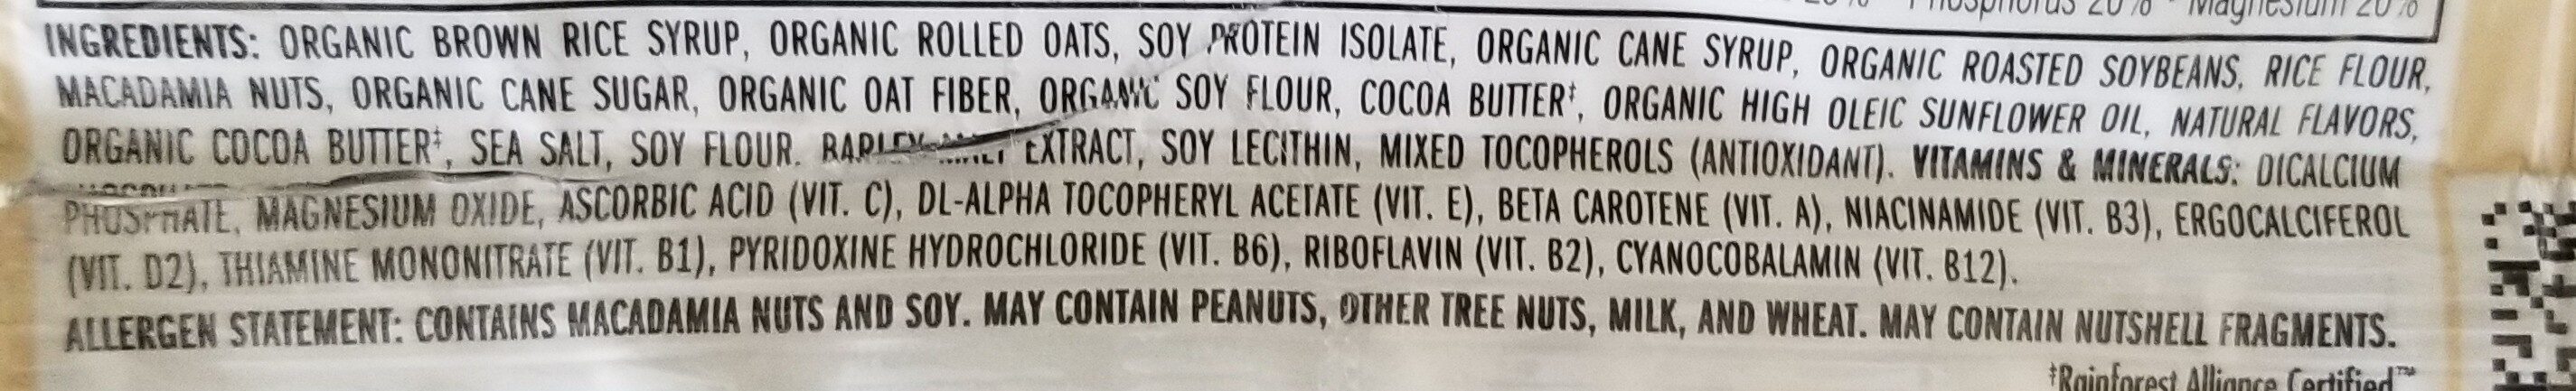 White chocolate macadamia nut bar ozs - Ingredients